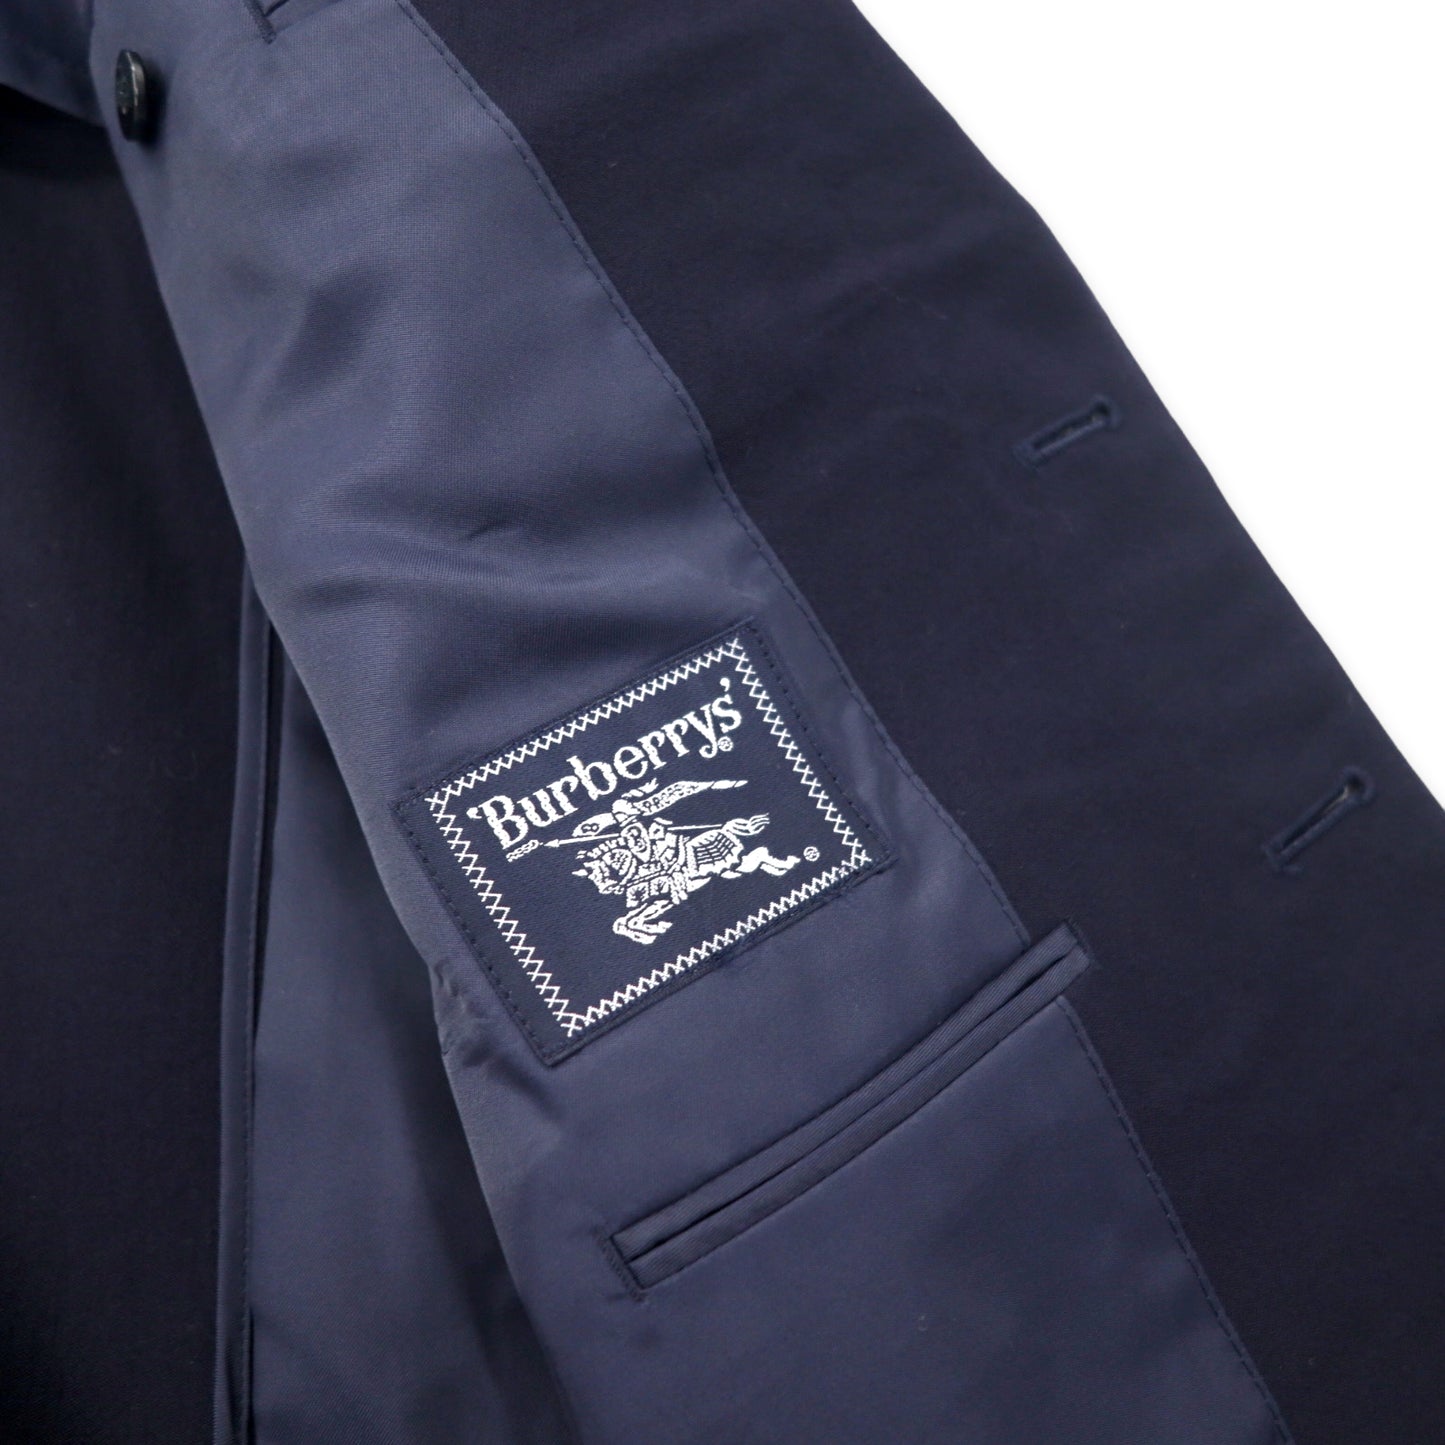 Burberrys スリーピース スーツ セットアップ 88-72-165Y4 ネイビー ウール ギャバジン オールド 日本製